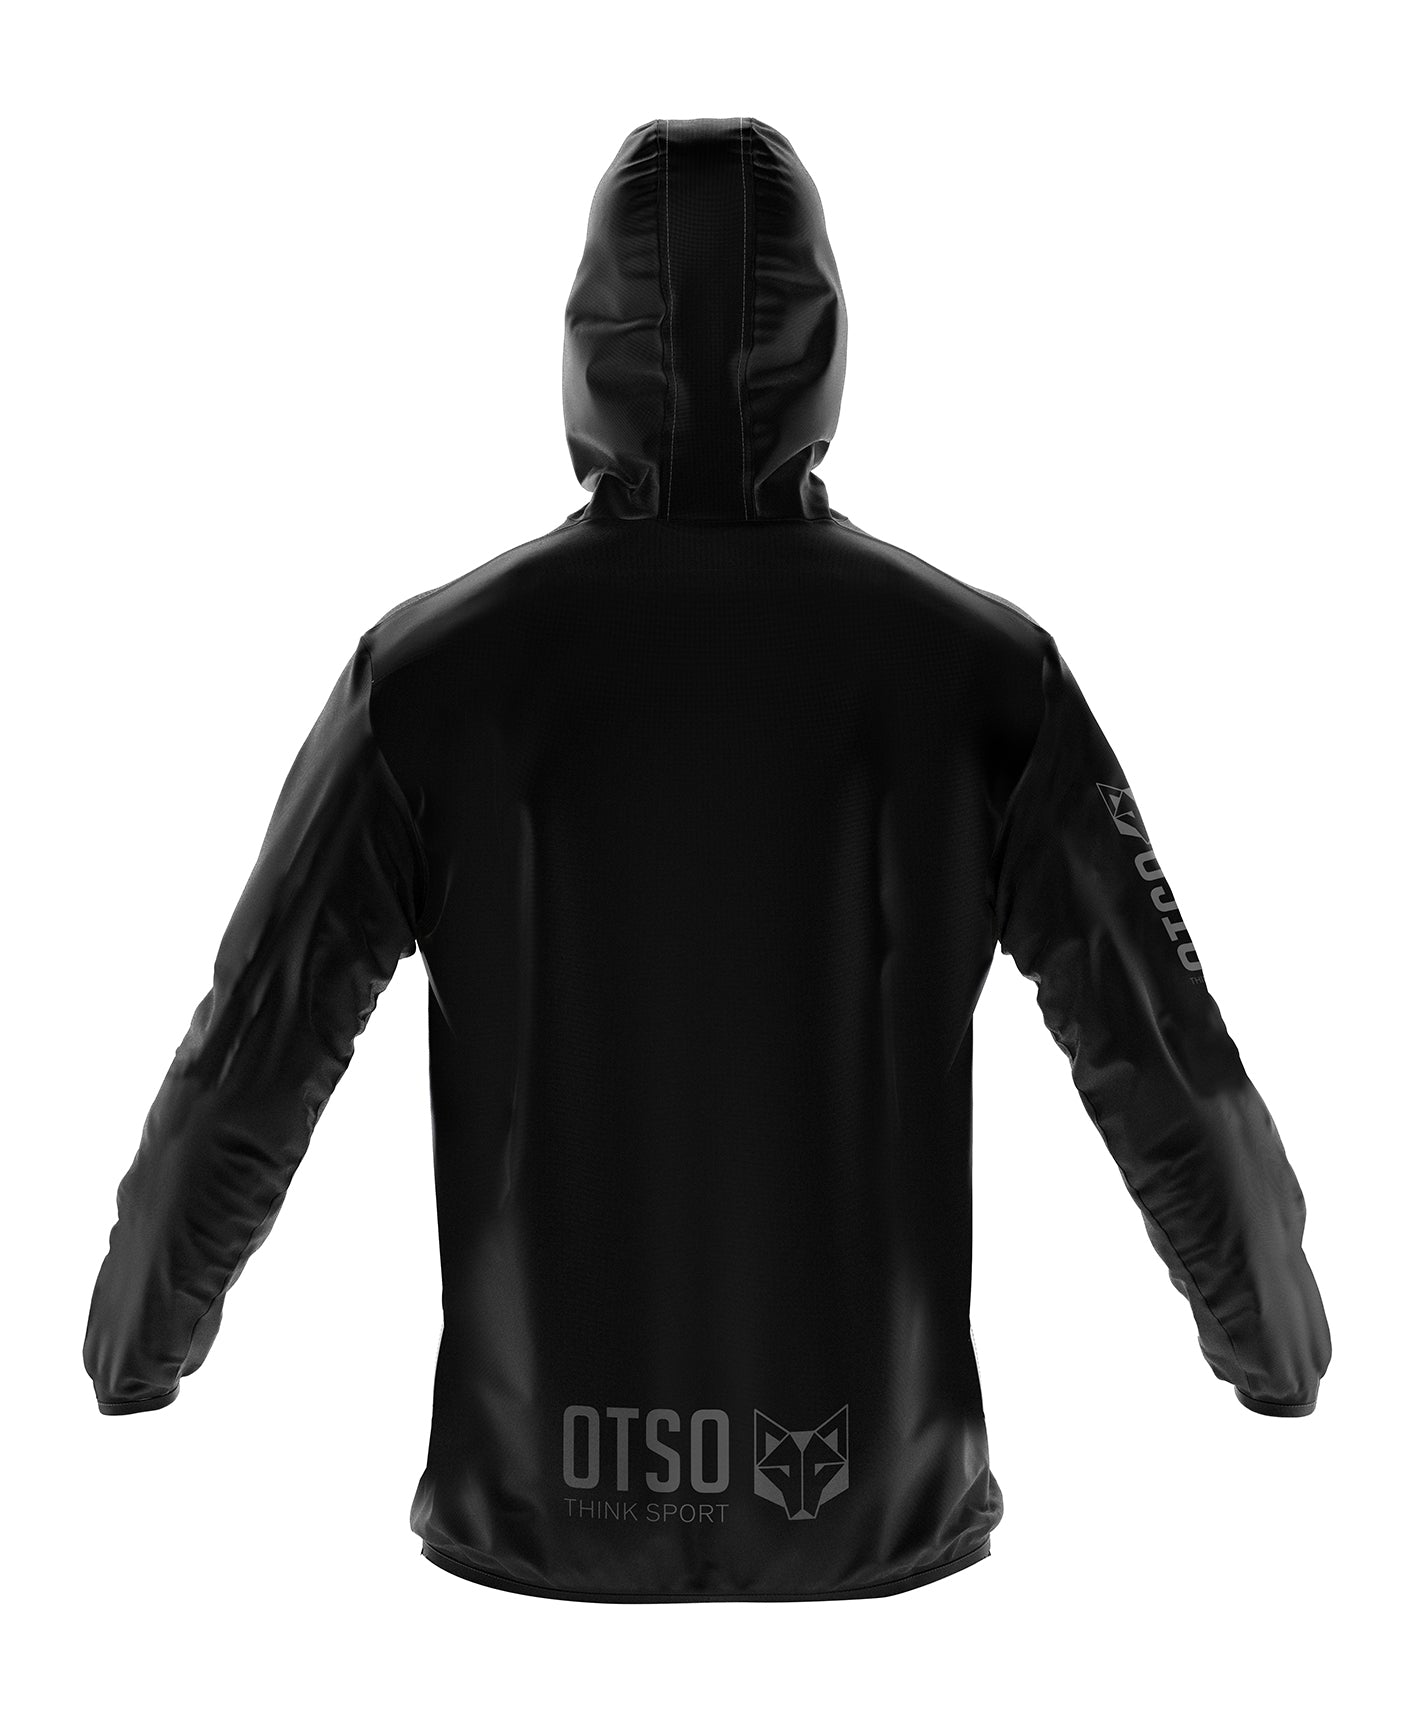 Unisex Running Jacket - Black